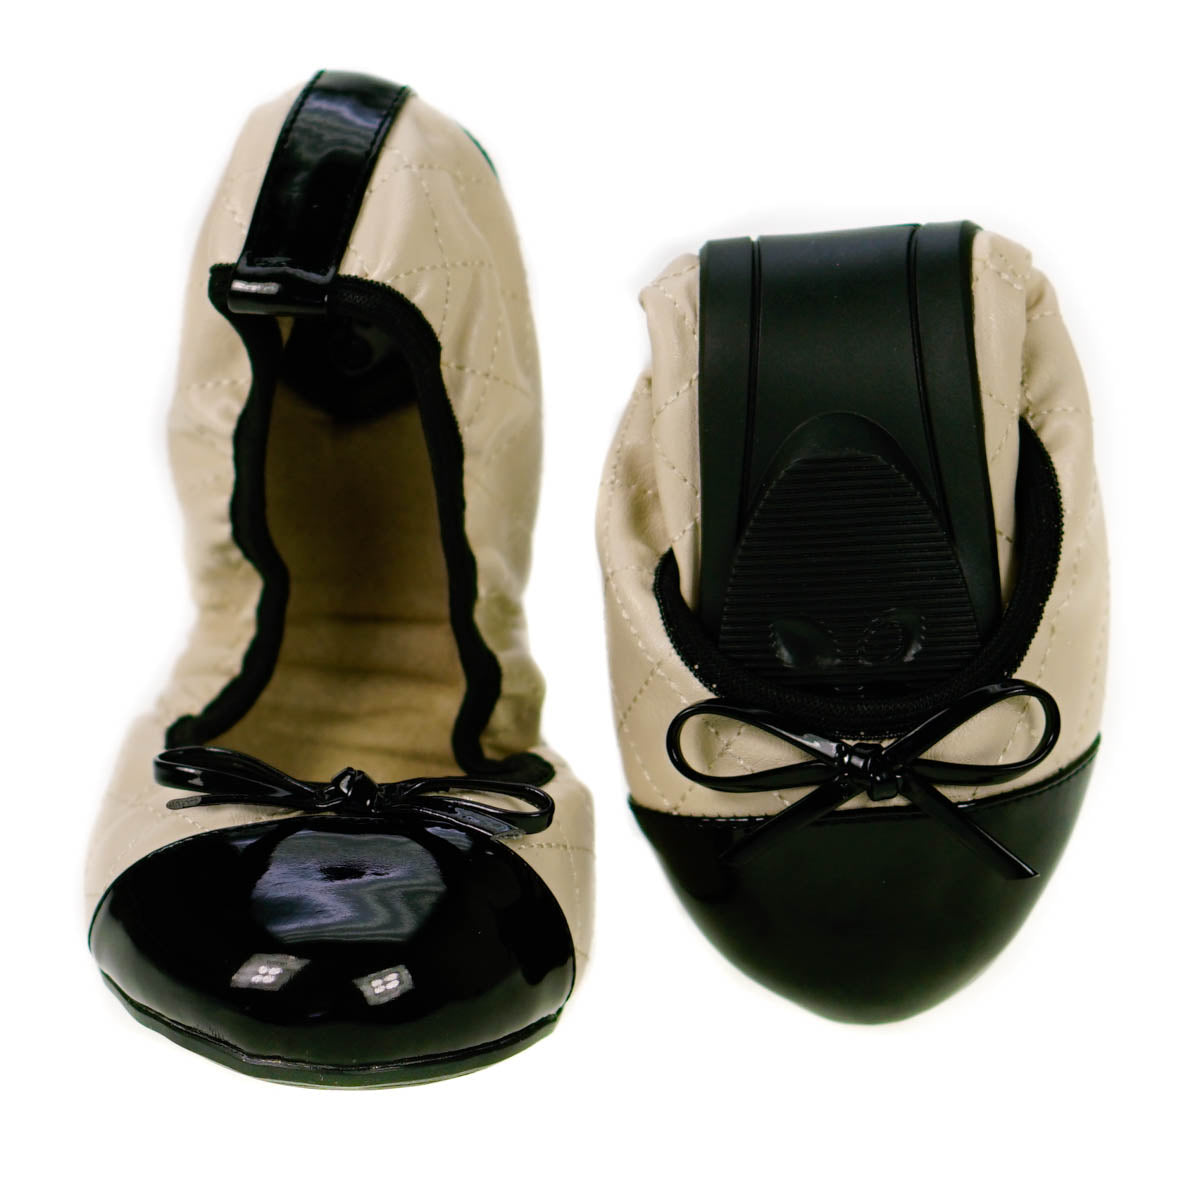 Butterfly Twists Olivia Ballerina Flat Shoes Cream & Black